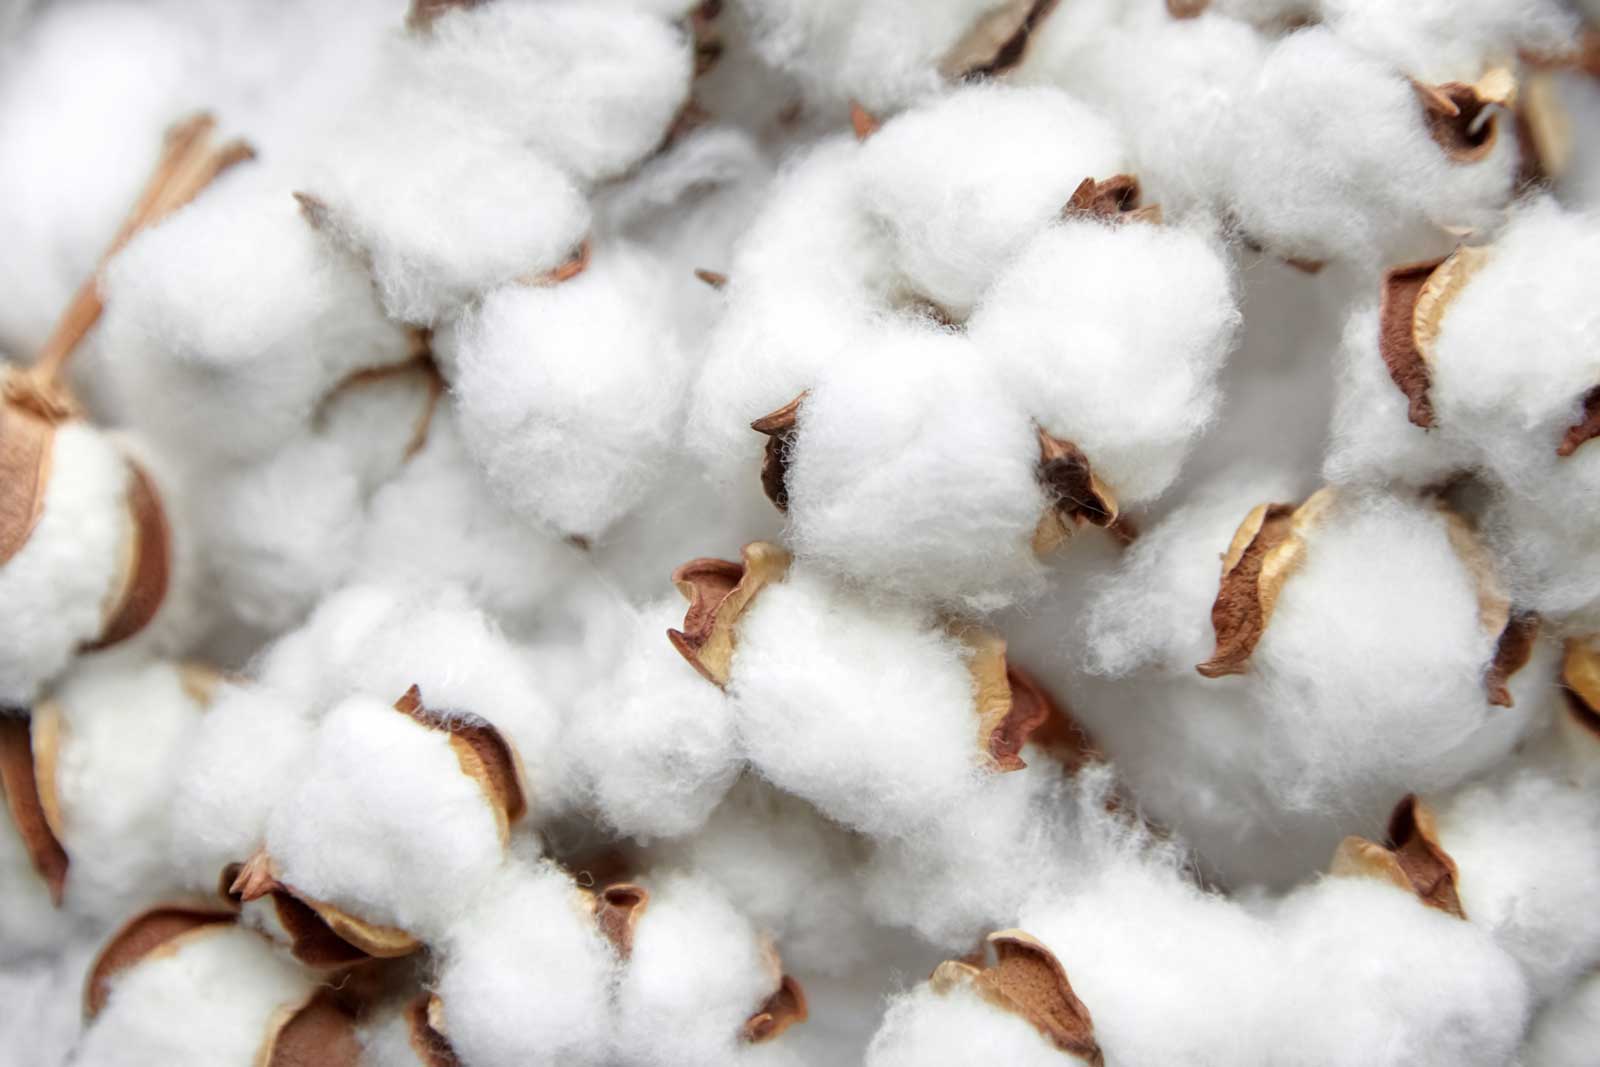 U.S. Cotton Trust Protocol joins the Cotton 2040’s platform and